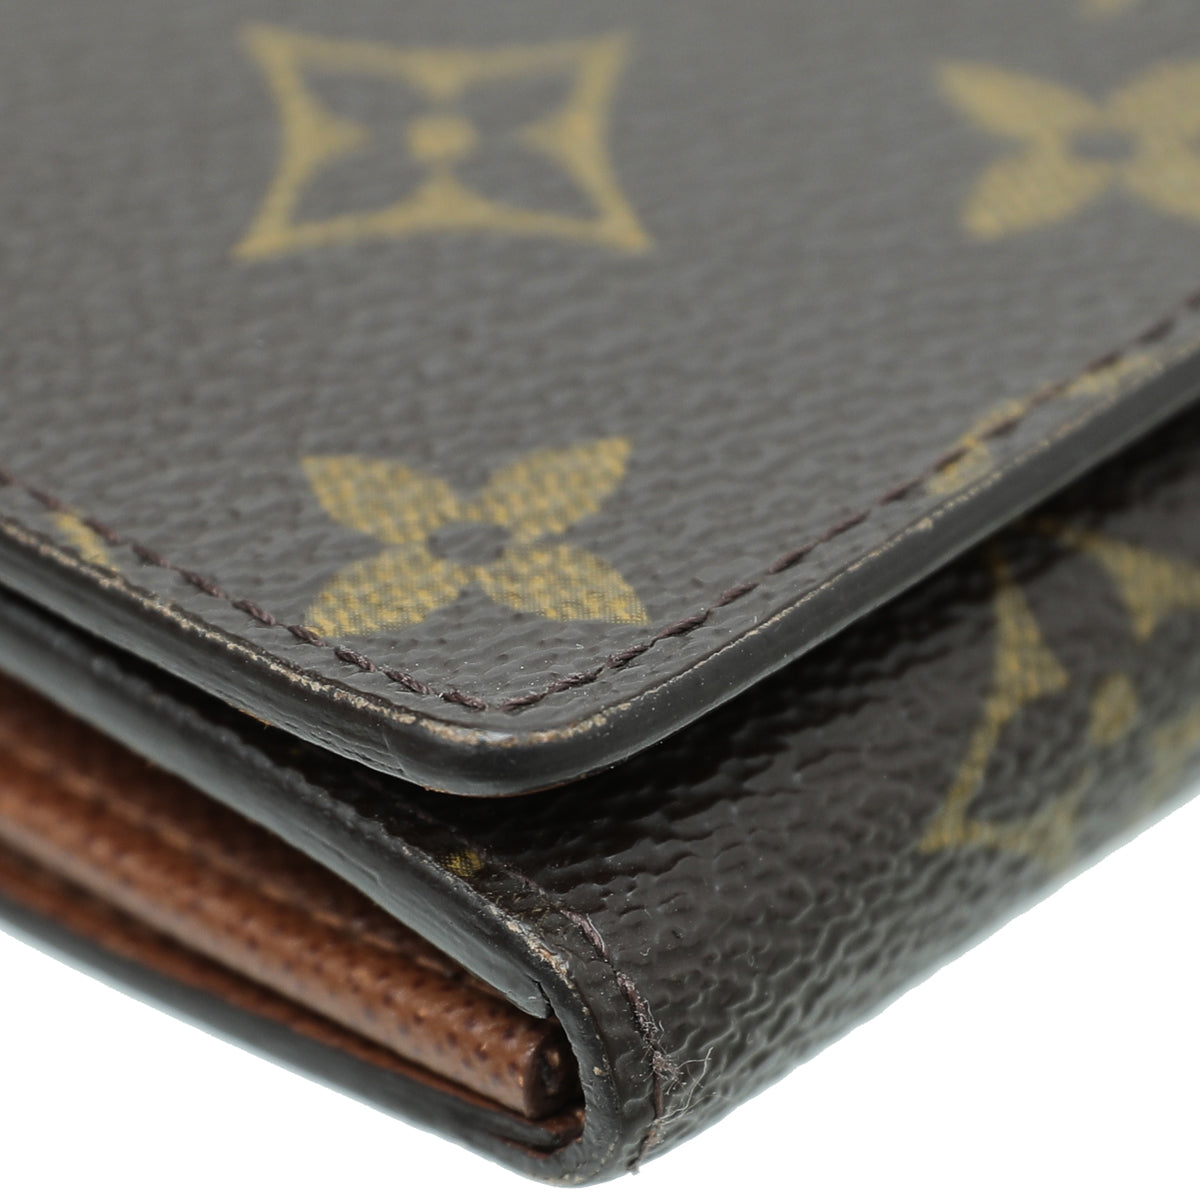 Louis Vuitton Portefeiulle Tresor M61730 Brown Monogram Wallet 11518